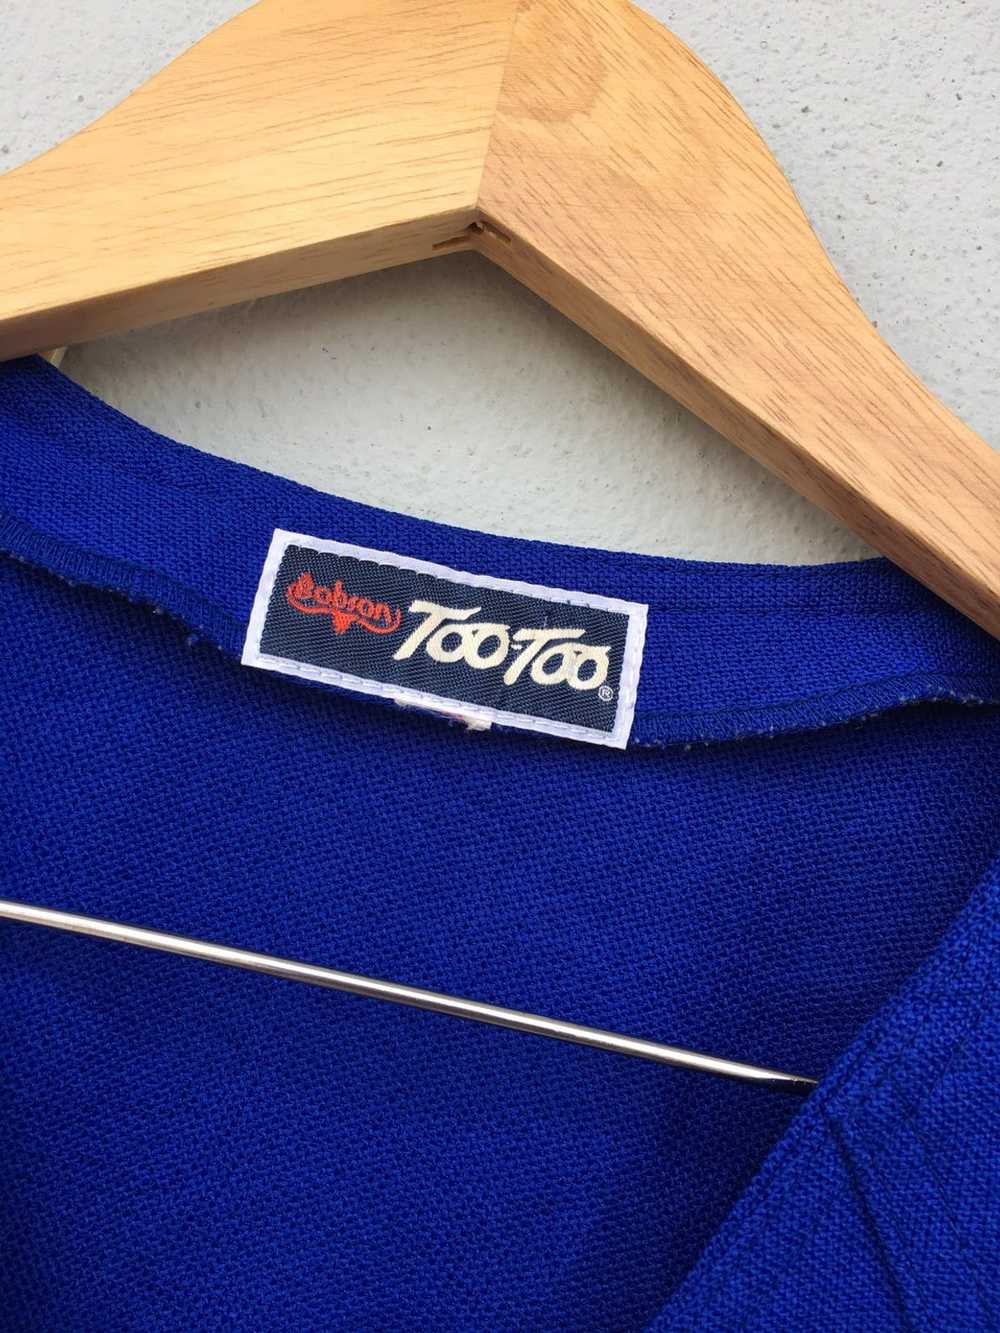 Japanese Brand vintage japanese brand bobson vest - image 2